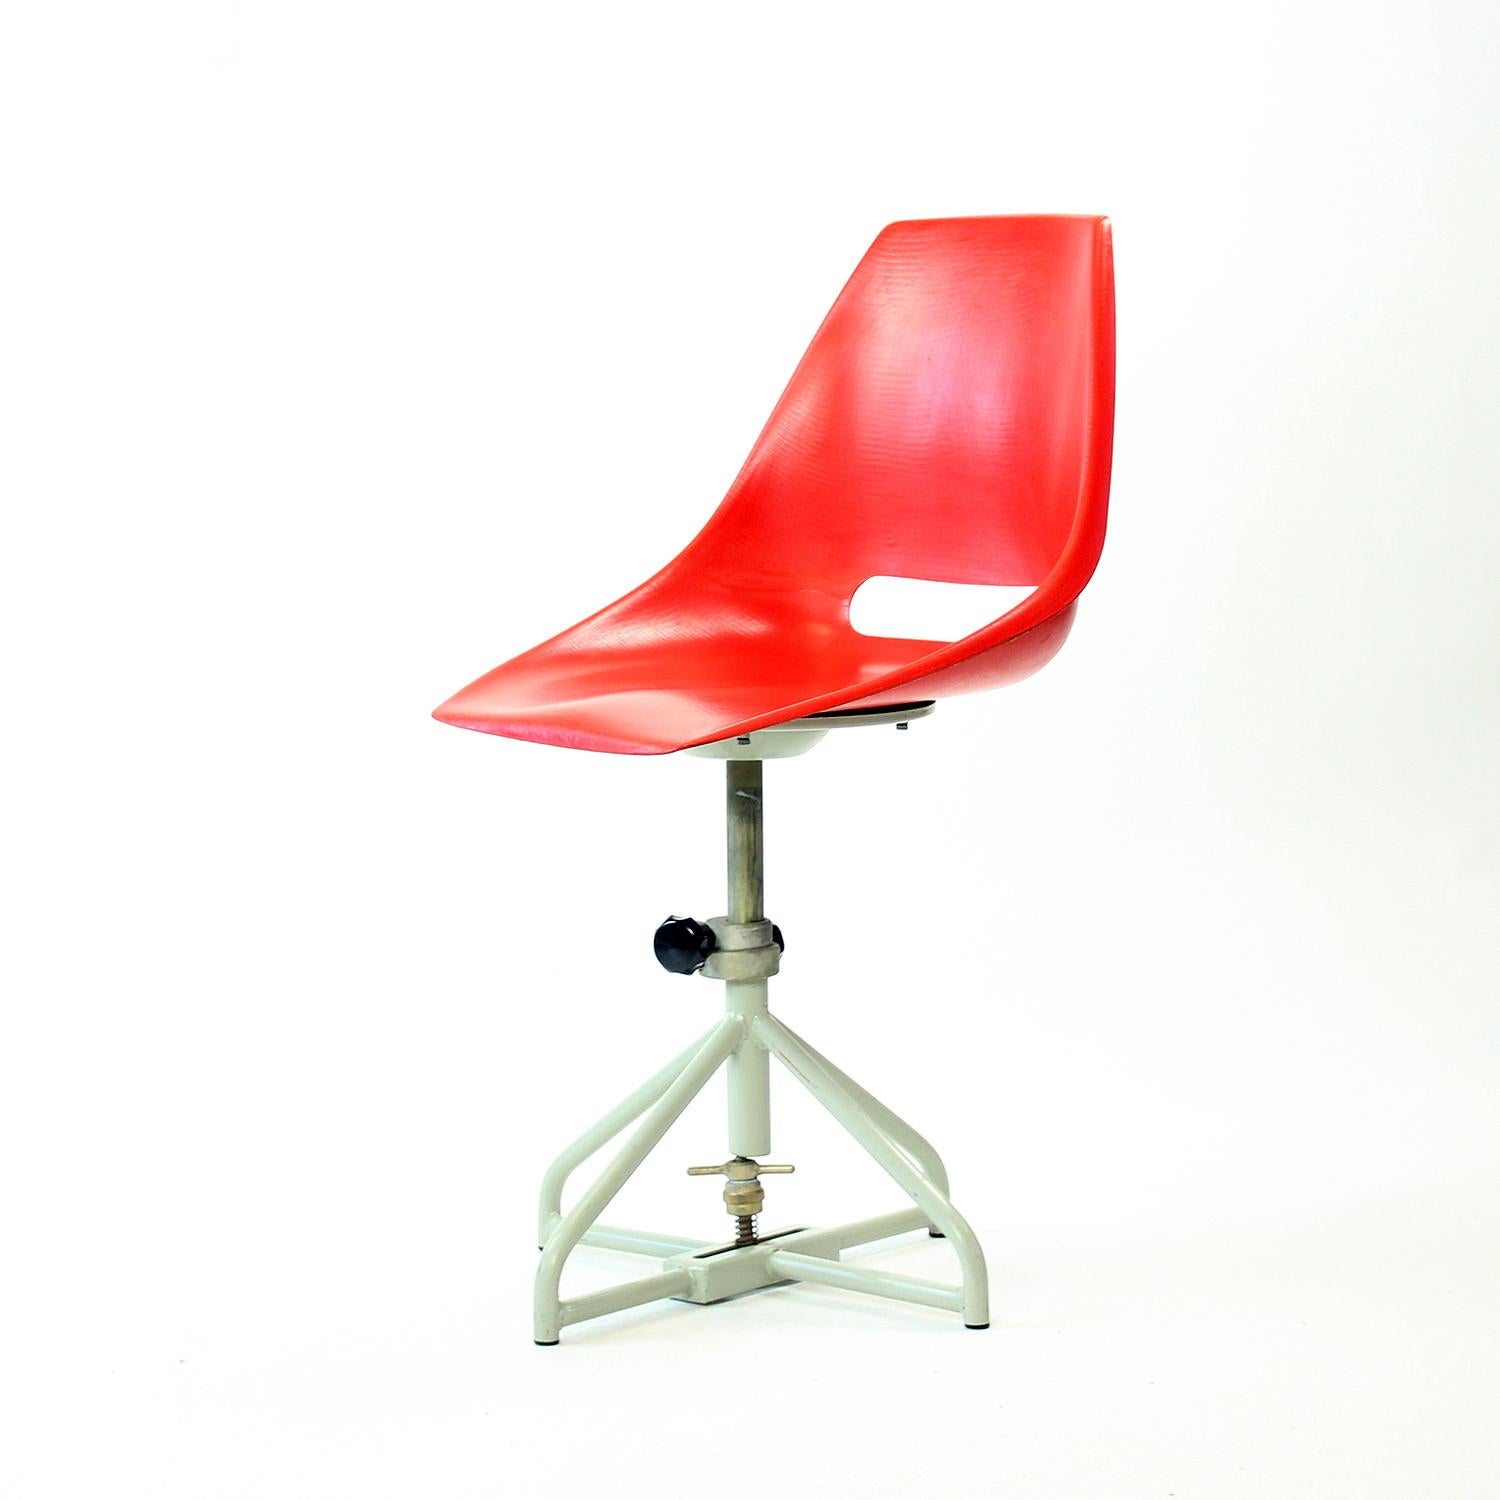 Mid-20th Century Red Tram Chair By Miroslav Navratil For Vertex, 1960s For Sale